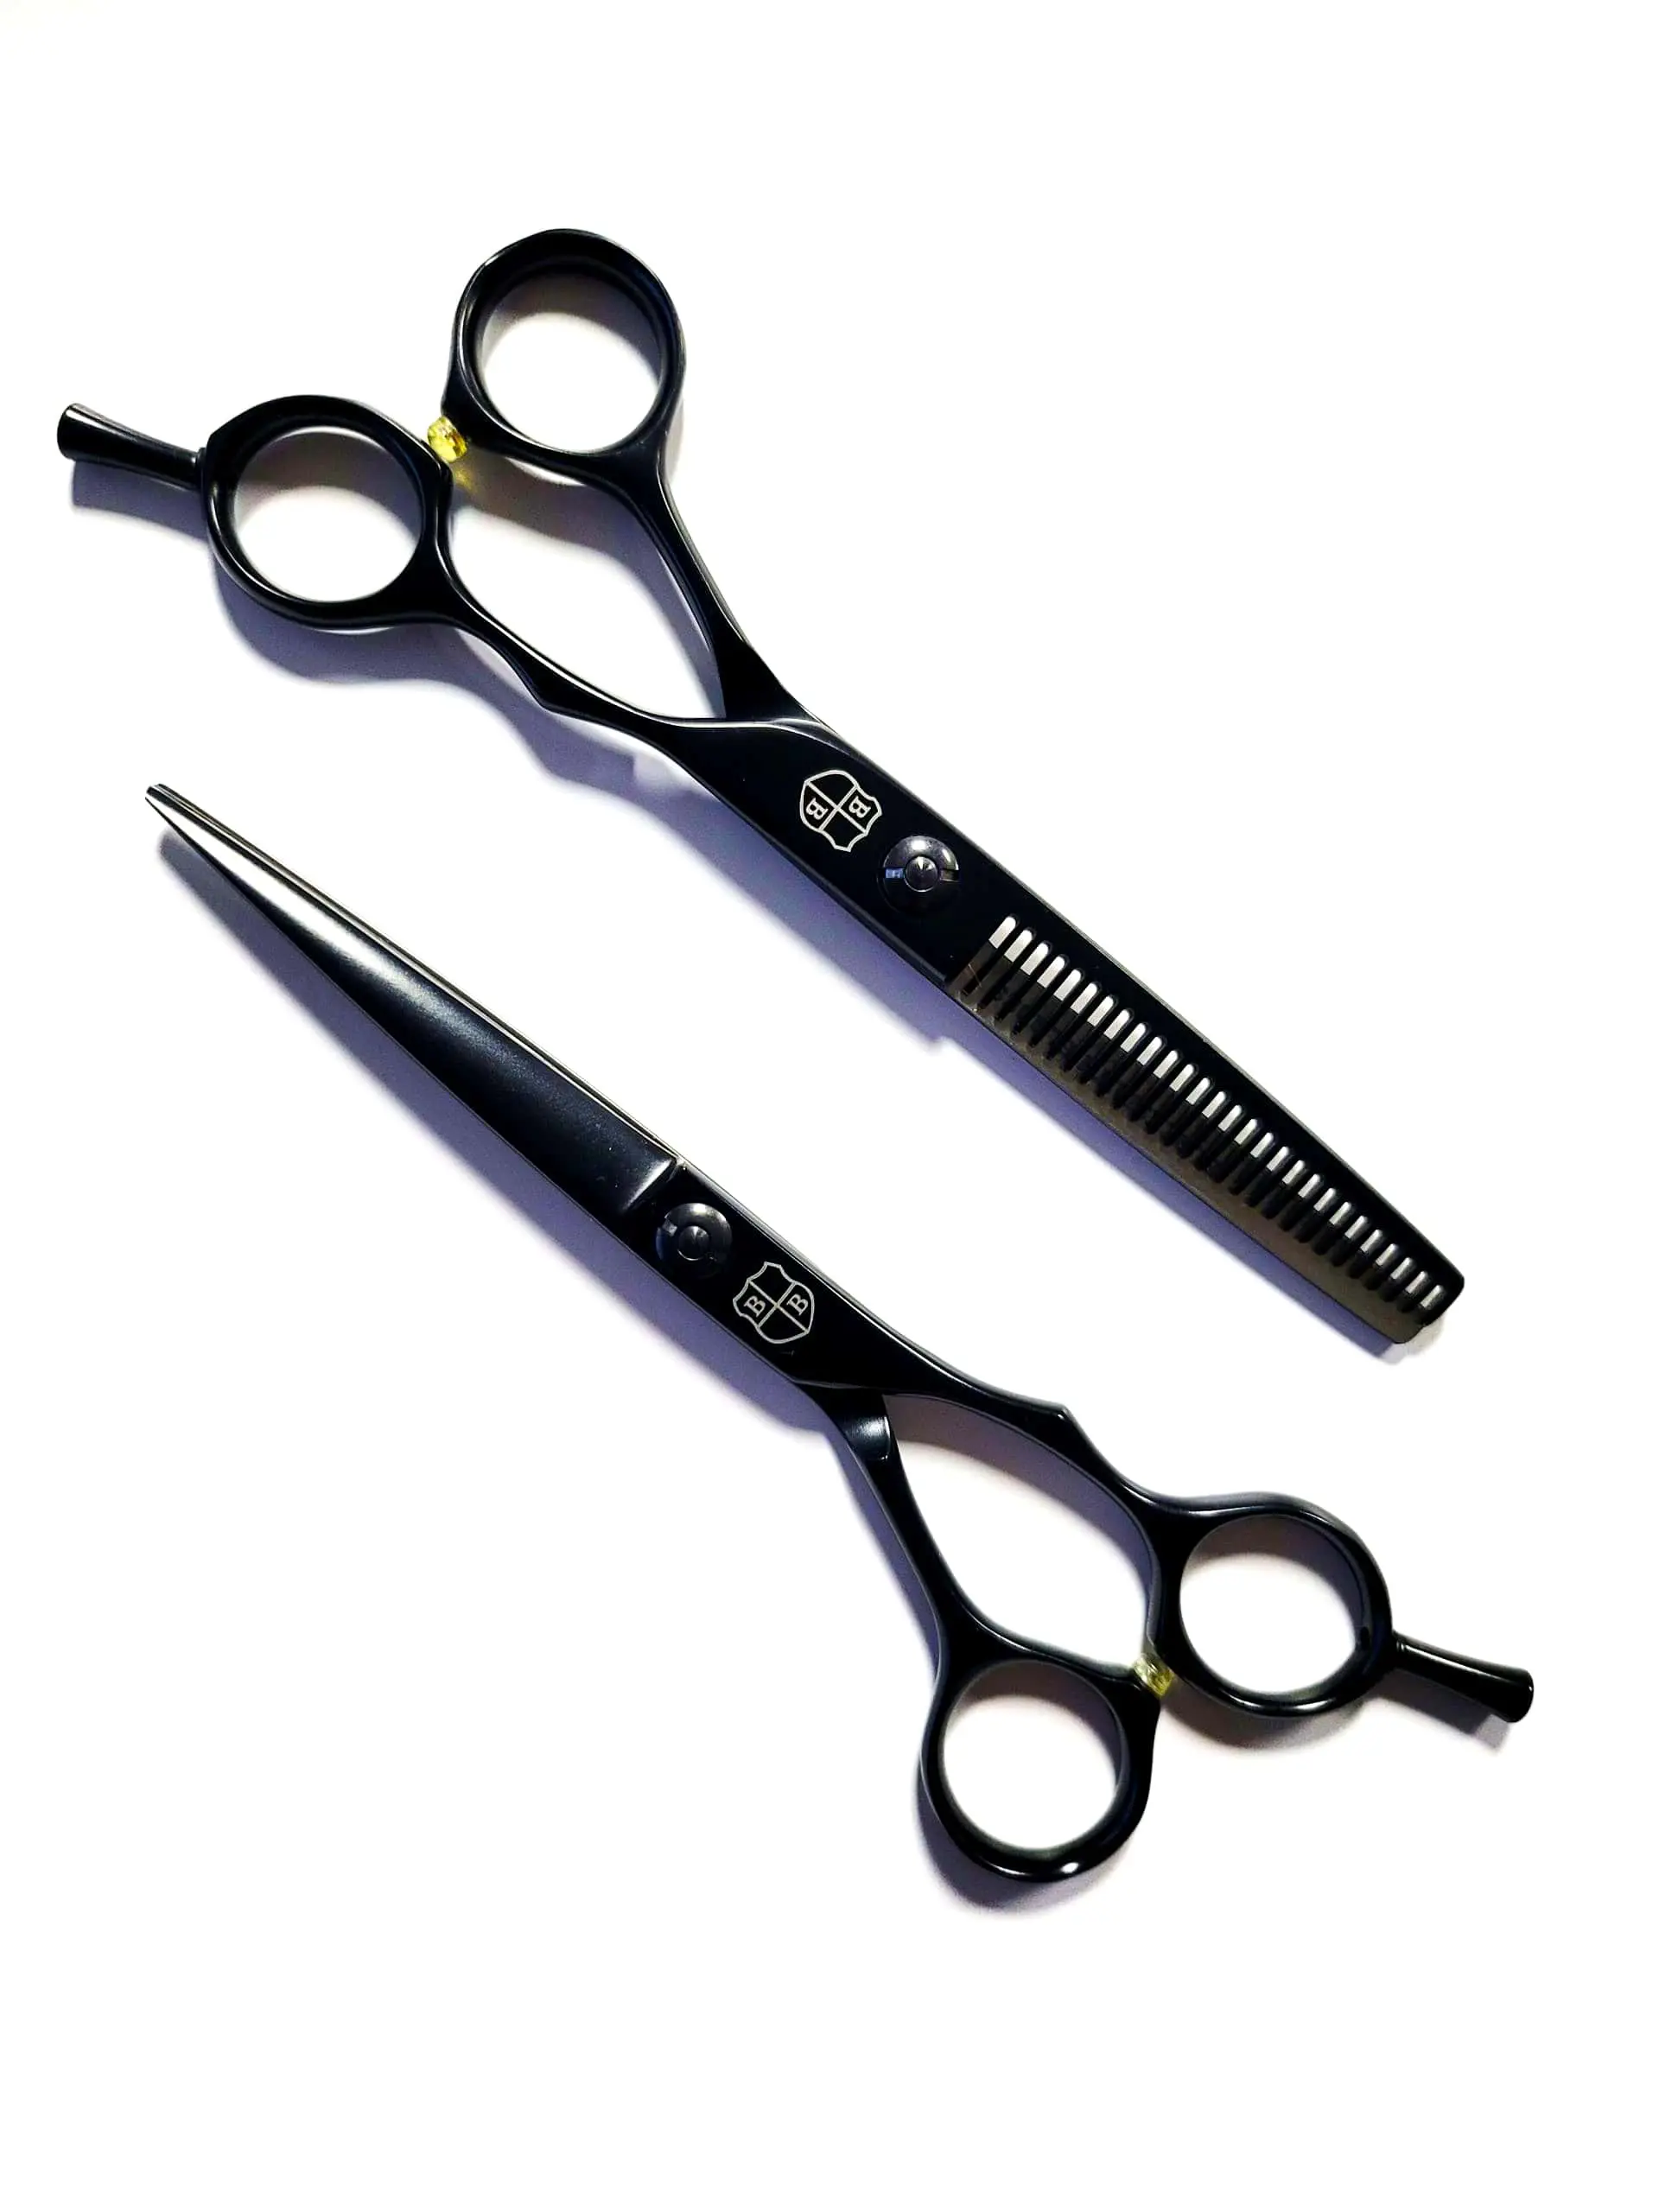 Hair Cutting Shears, Barber Scissors